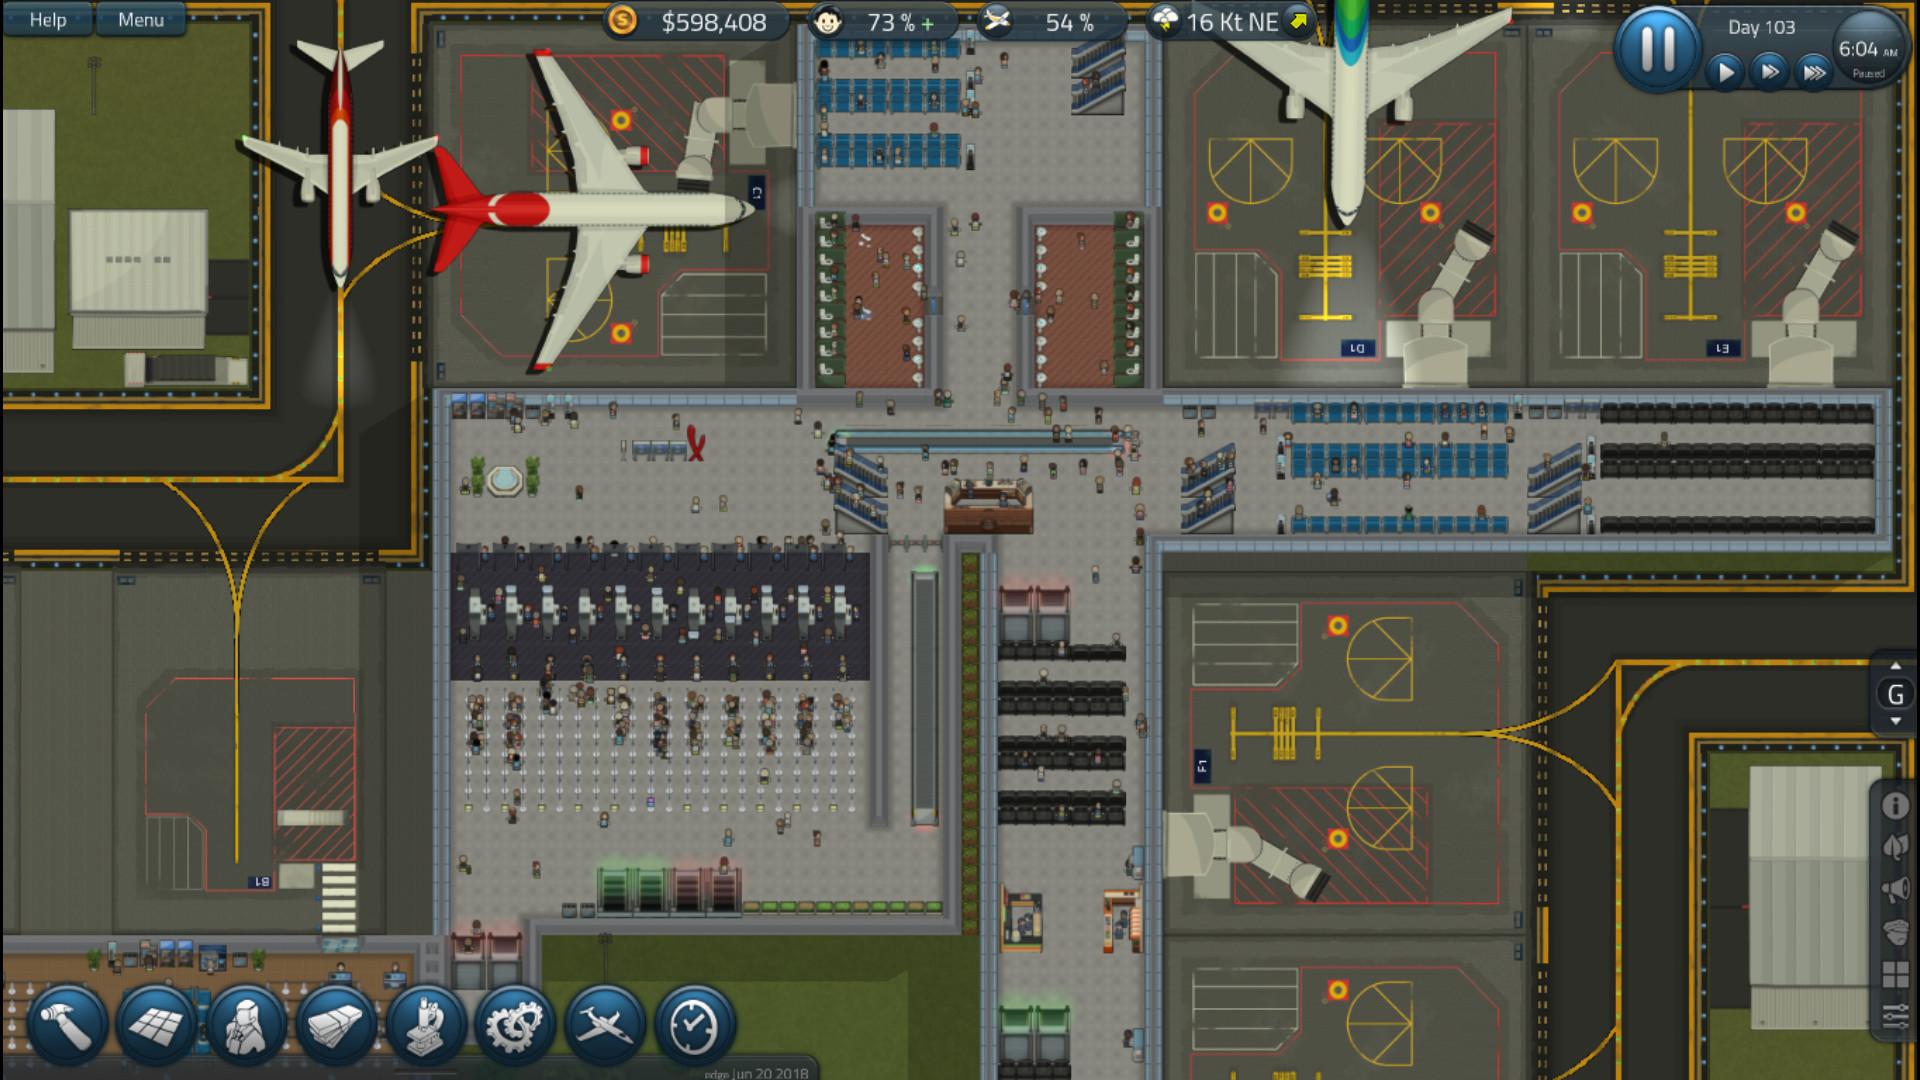 Screenshot №11 from game SimAirport